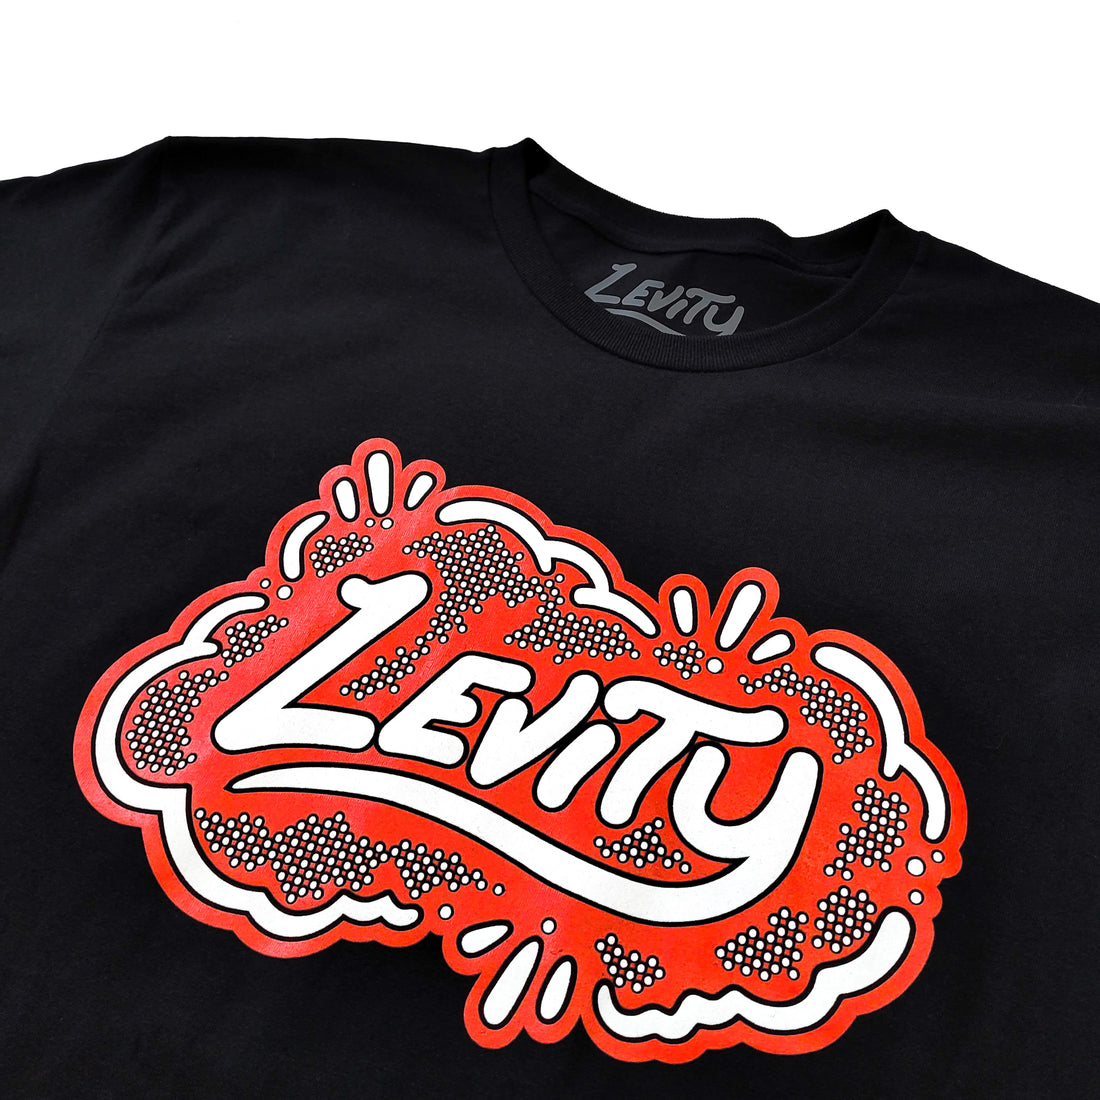 LEVITY - Cloud Logo - Black Tee